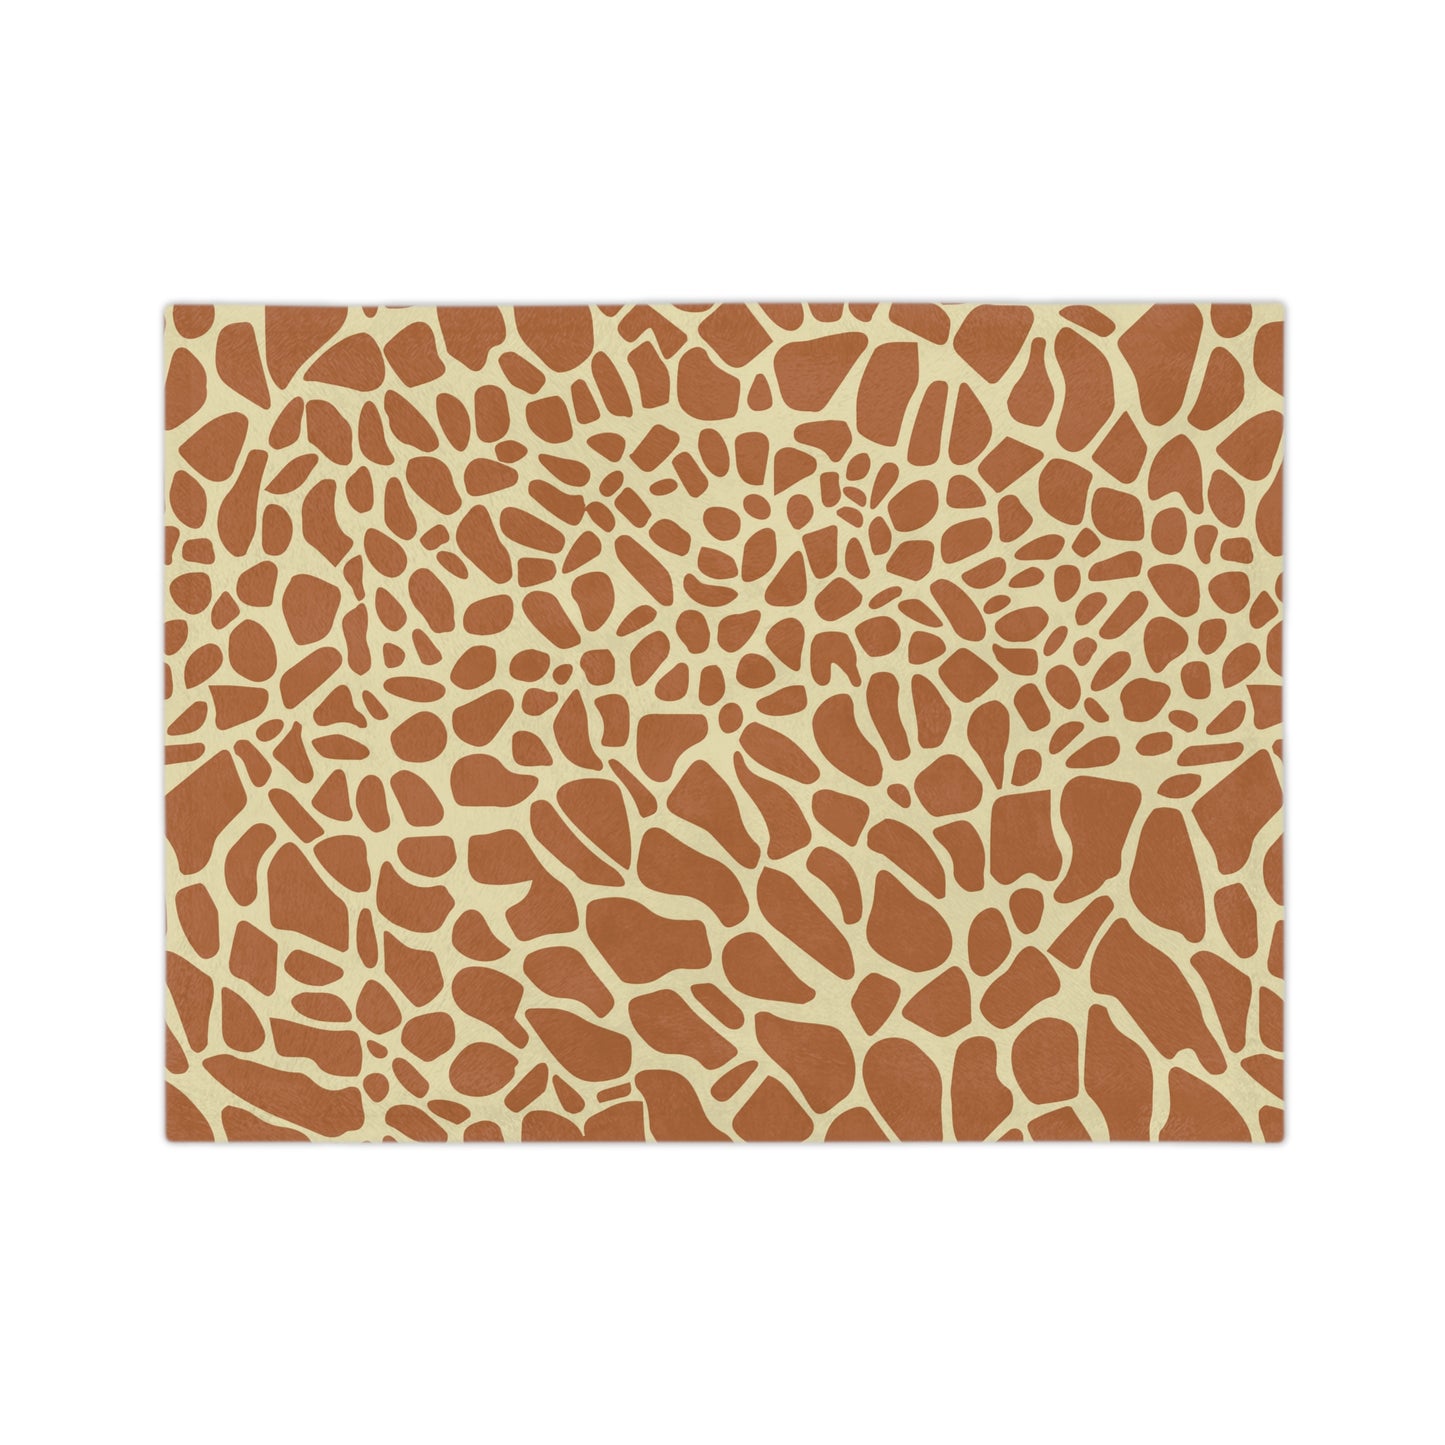 Gentle Giraffe Pattern Theme Throw Sofa Bed Blanket Giraffe Nursery - Soft Thick Velveteen Minky Throw Blanket